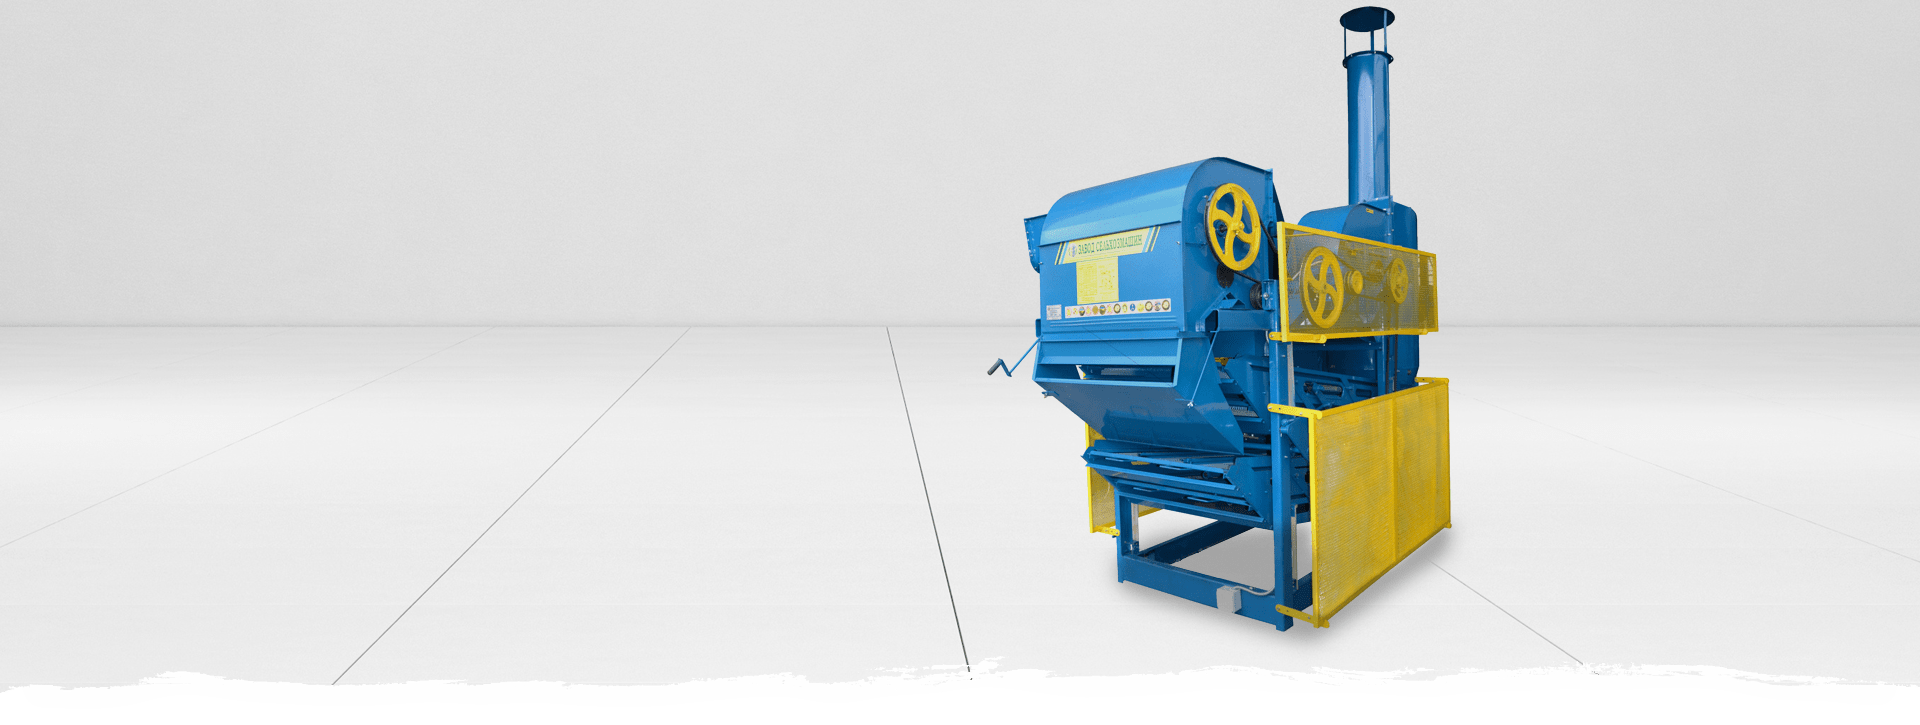 Limpiadora de granos estacionaria OBC-25CC con ciclón integrado, foto